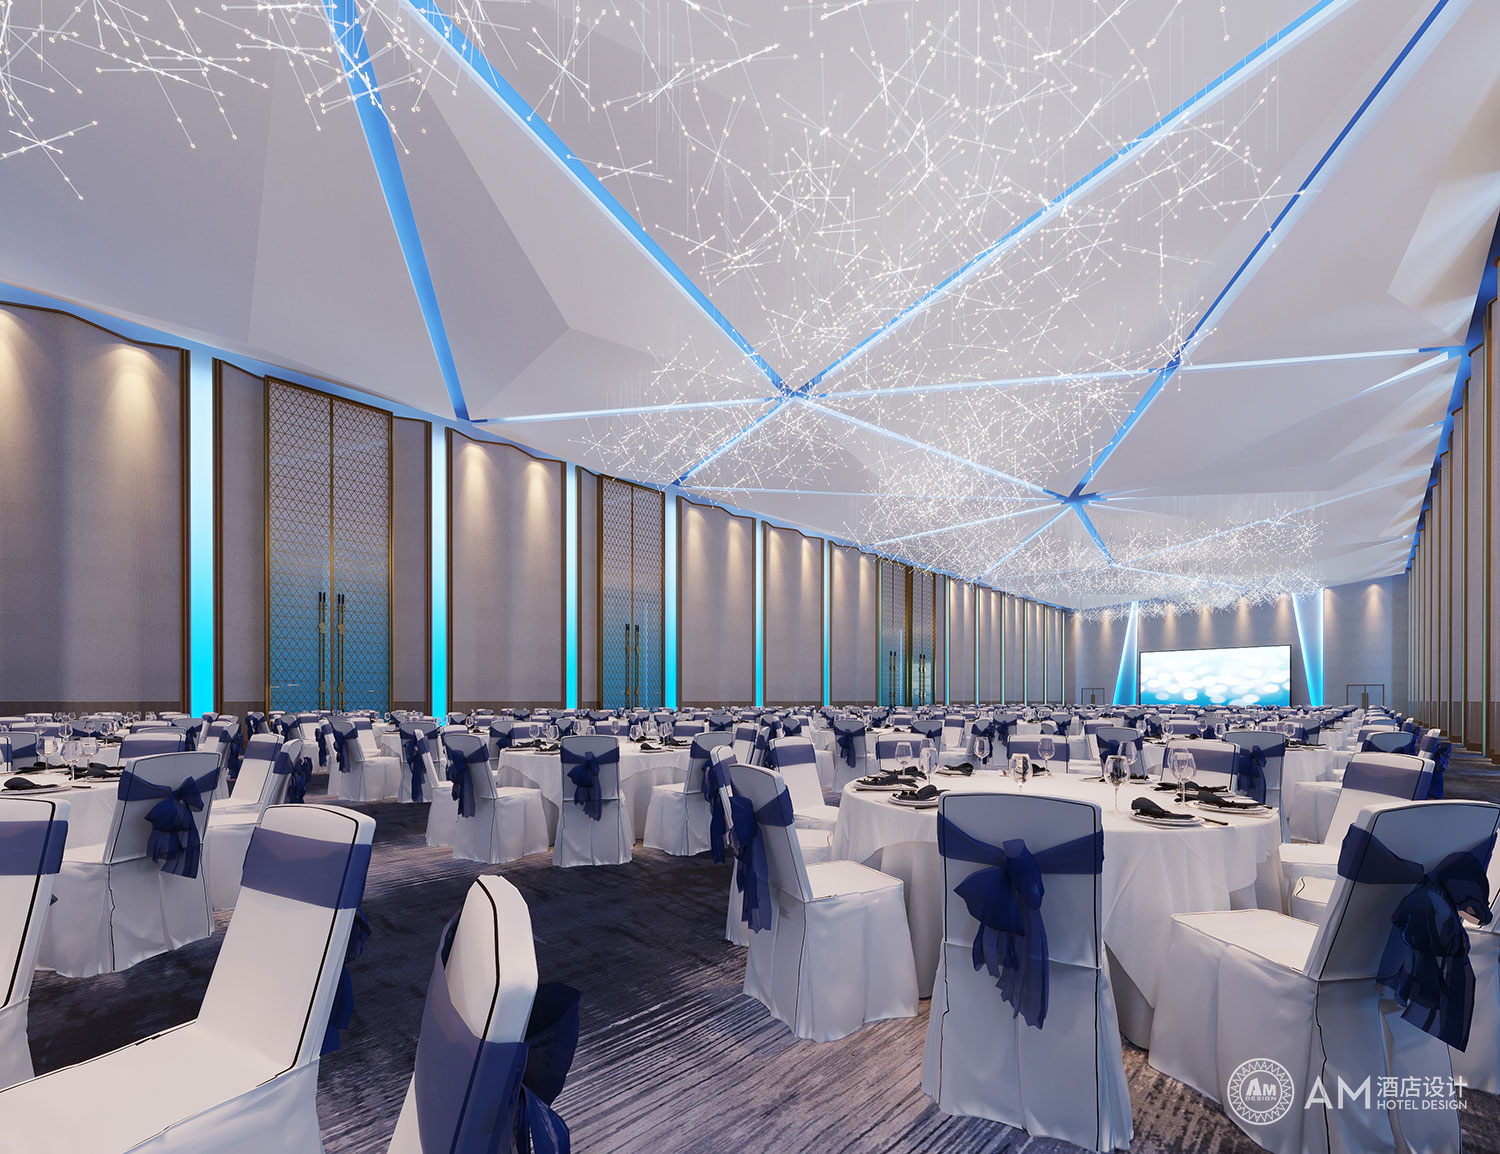 AM DESIGN | Design of banqueting hall in Baida Wanmei Hotel